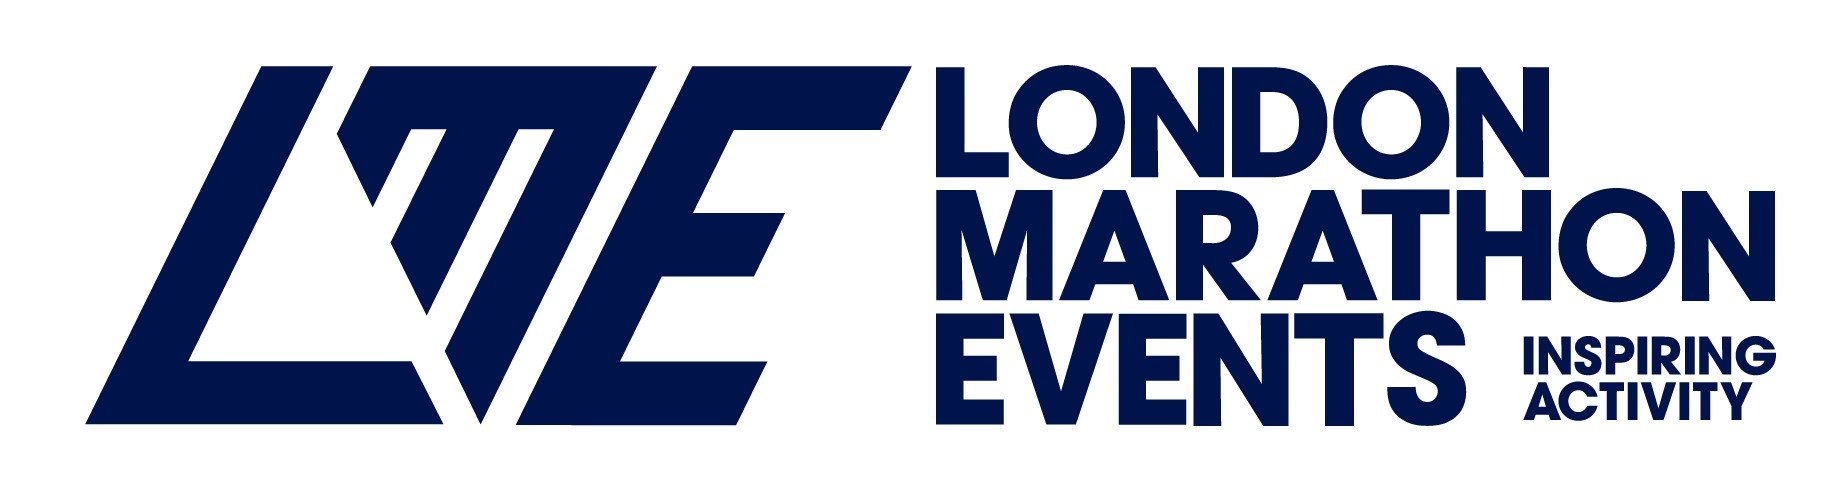 London-Marathon-Events.jpg